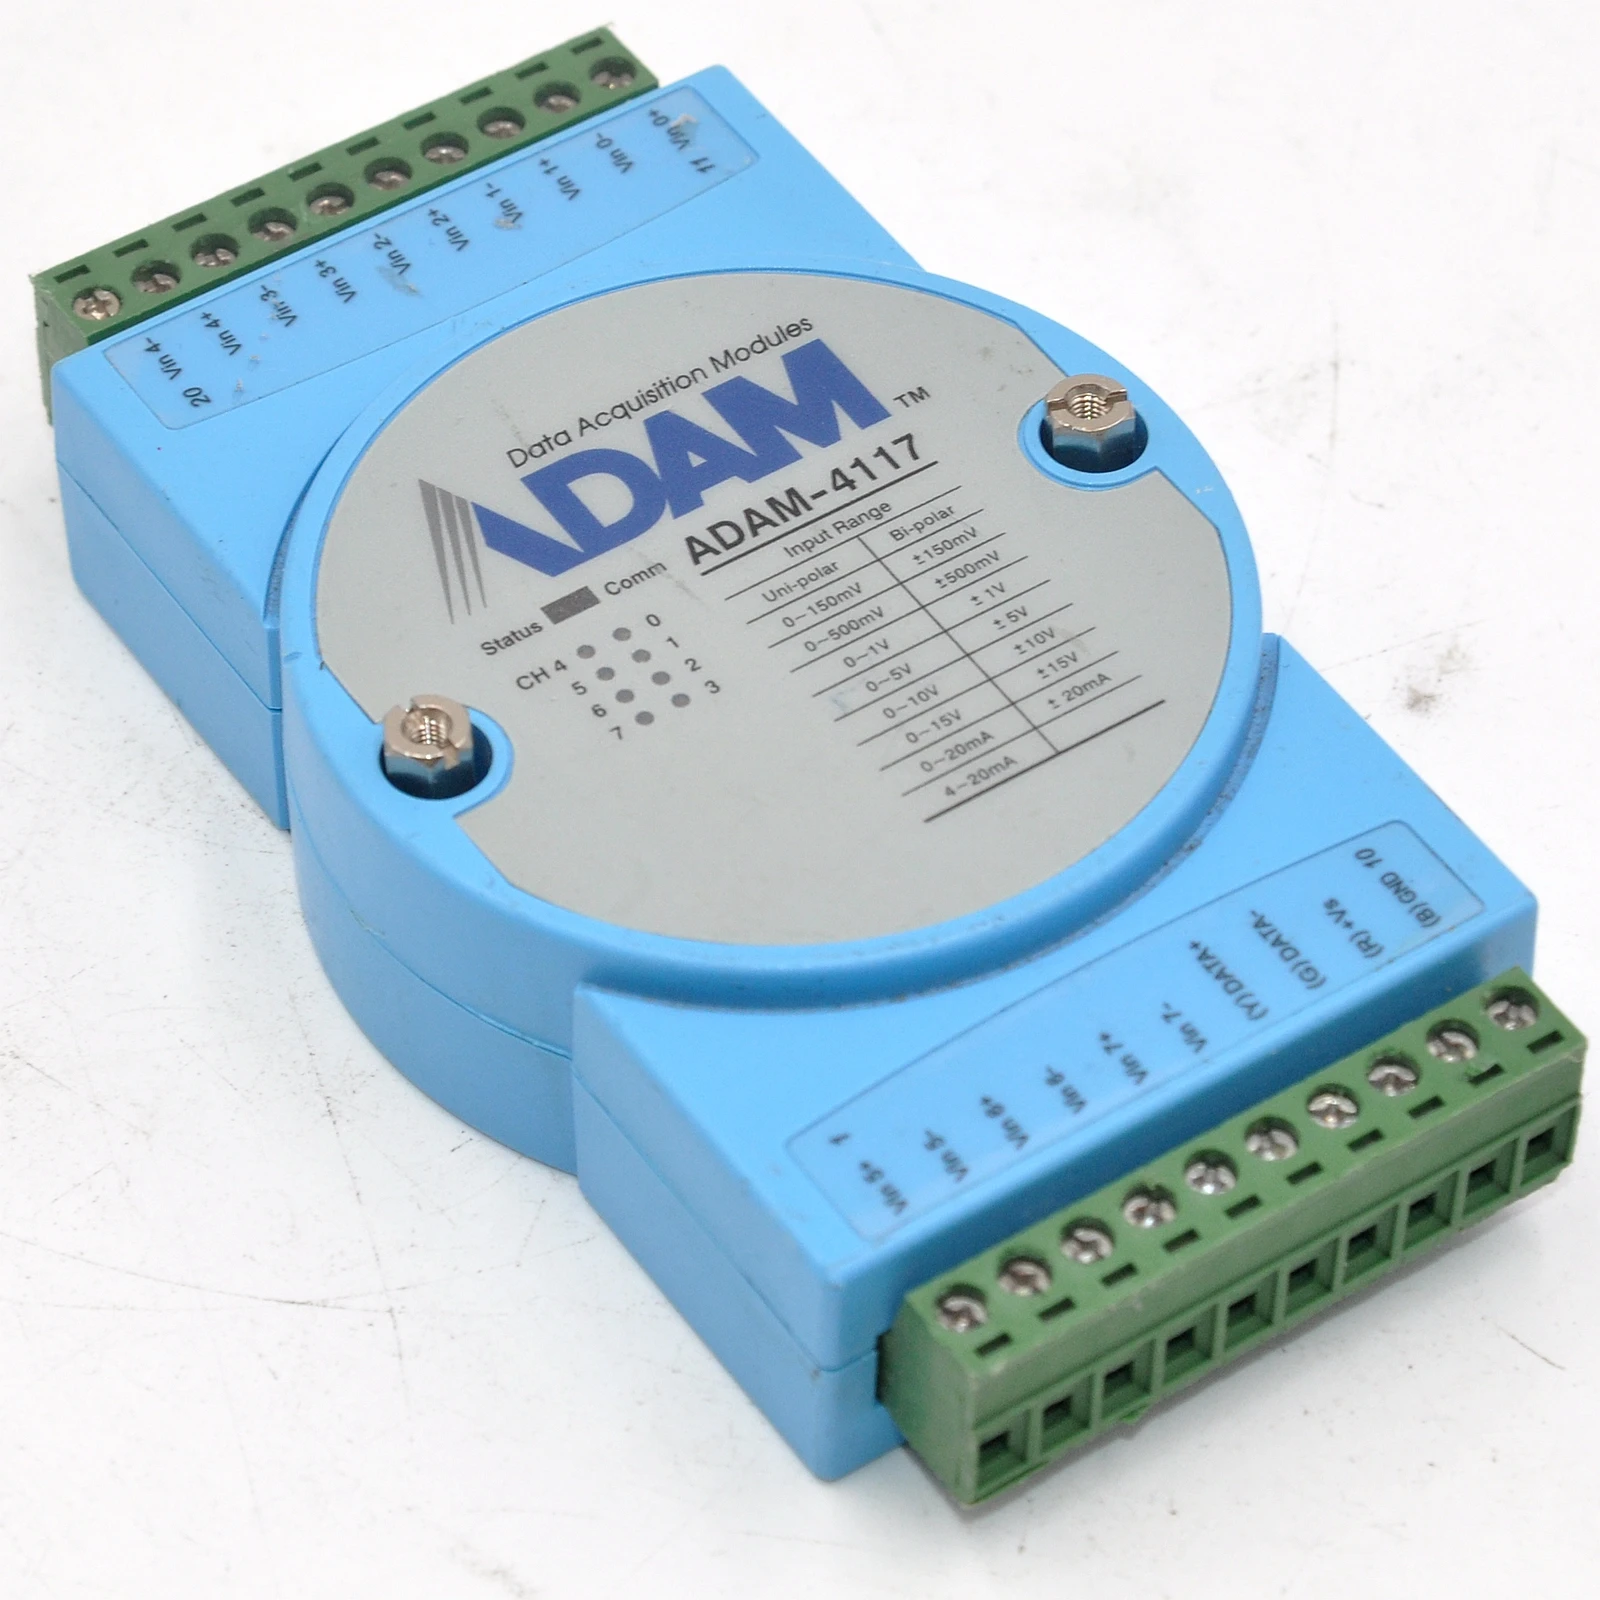 Advantech adam-4117 8-channel analog input acquisition module MODBUS wide temperature